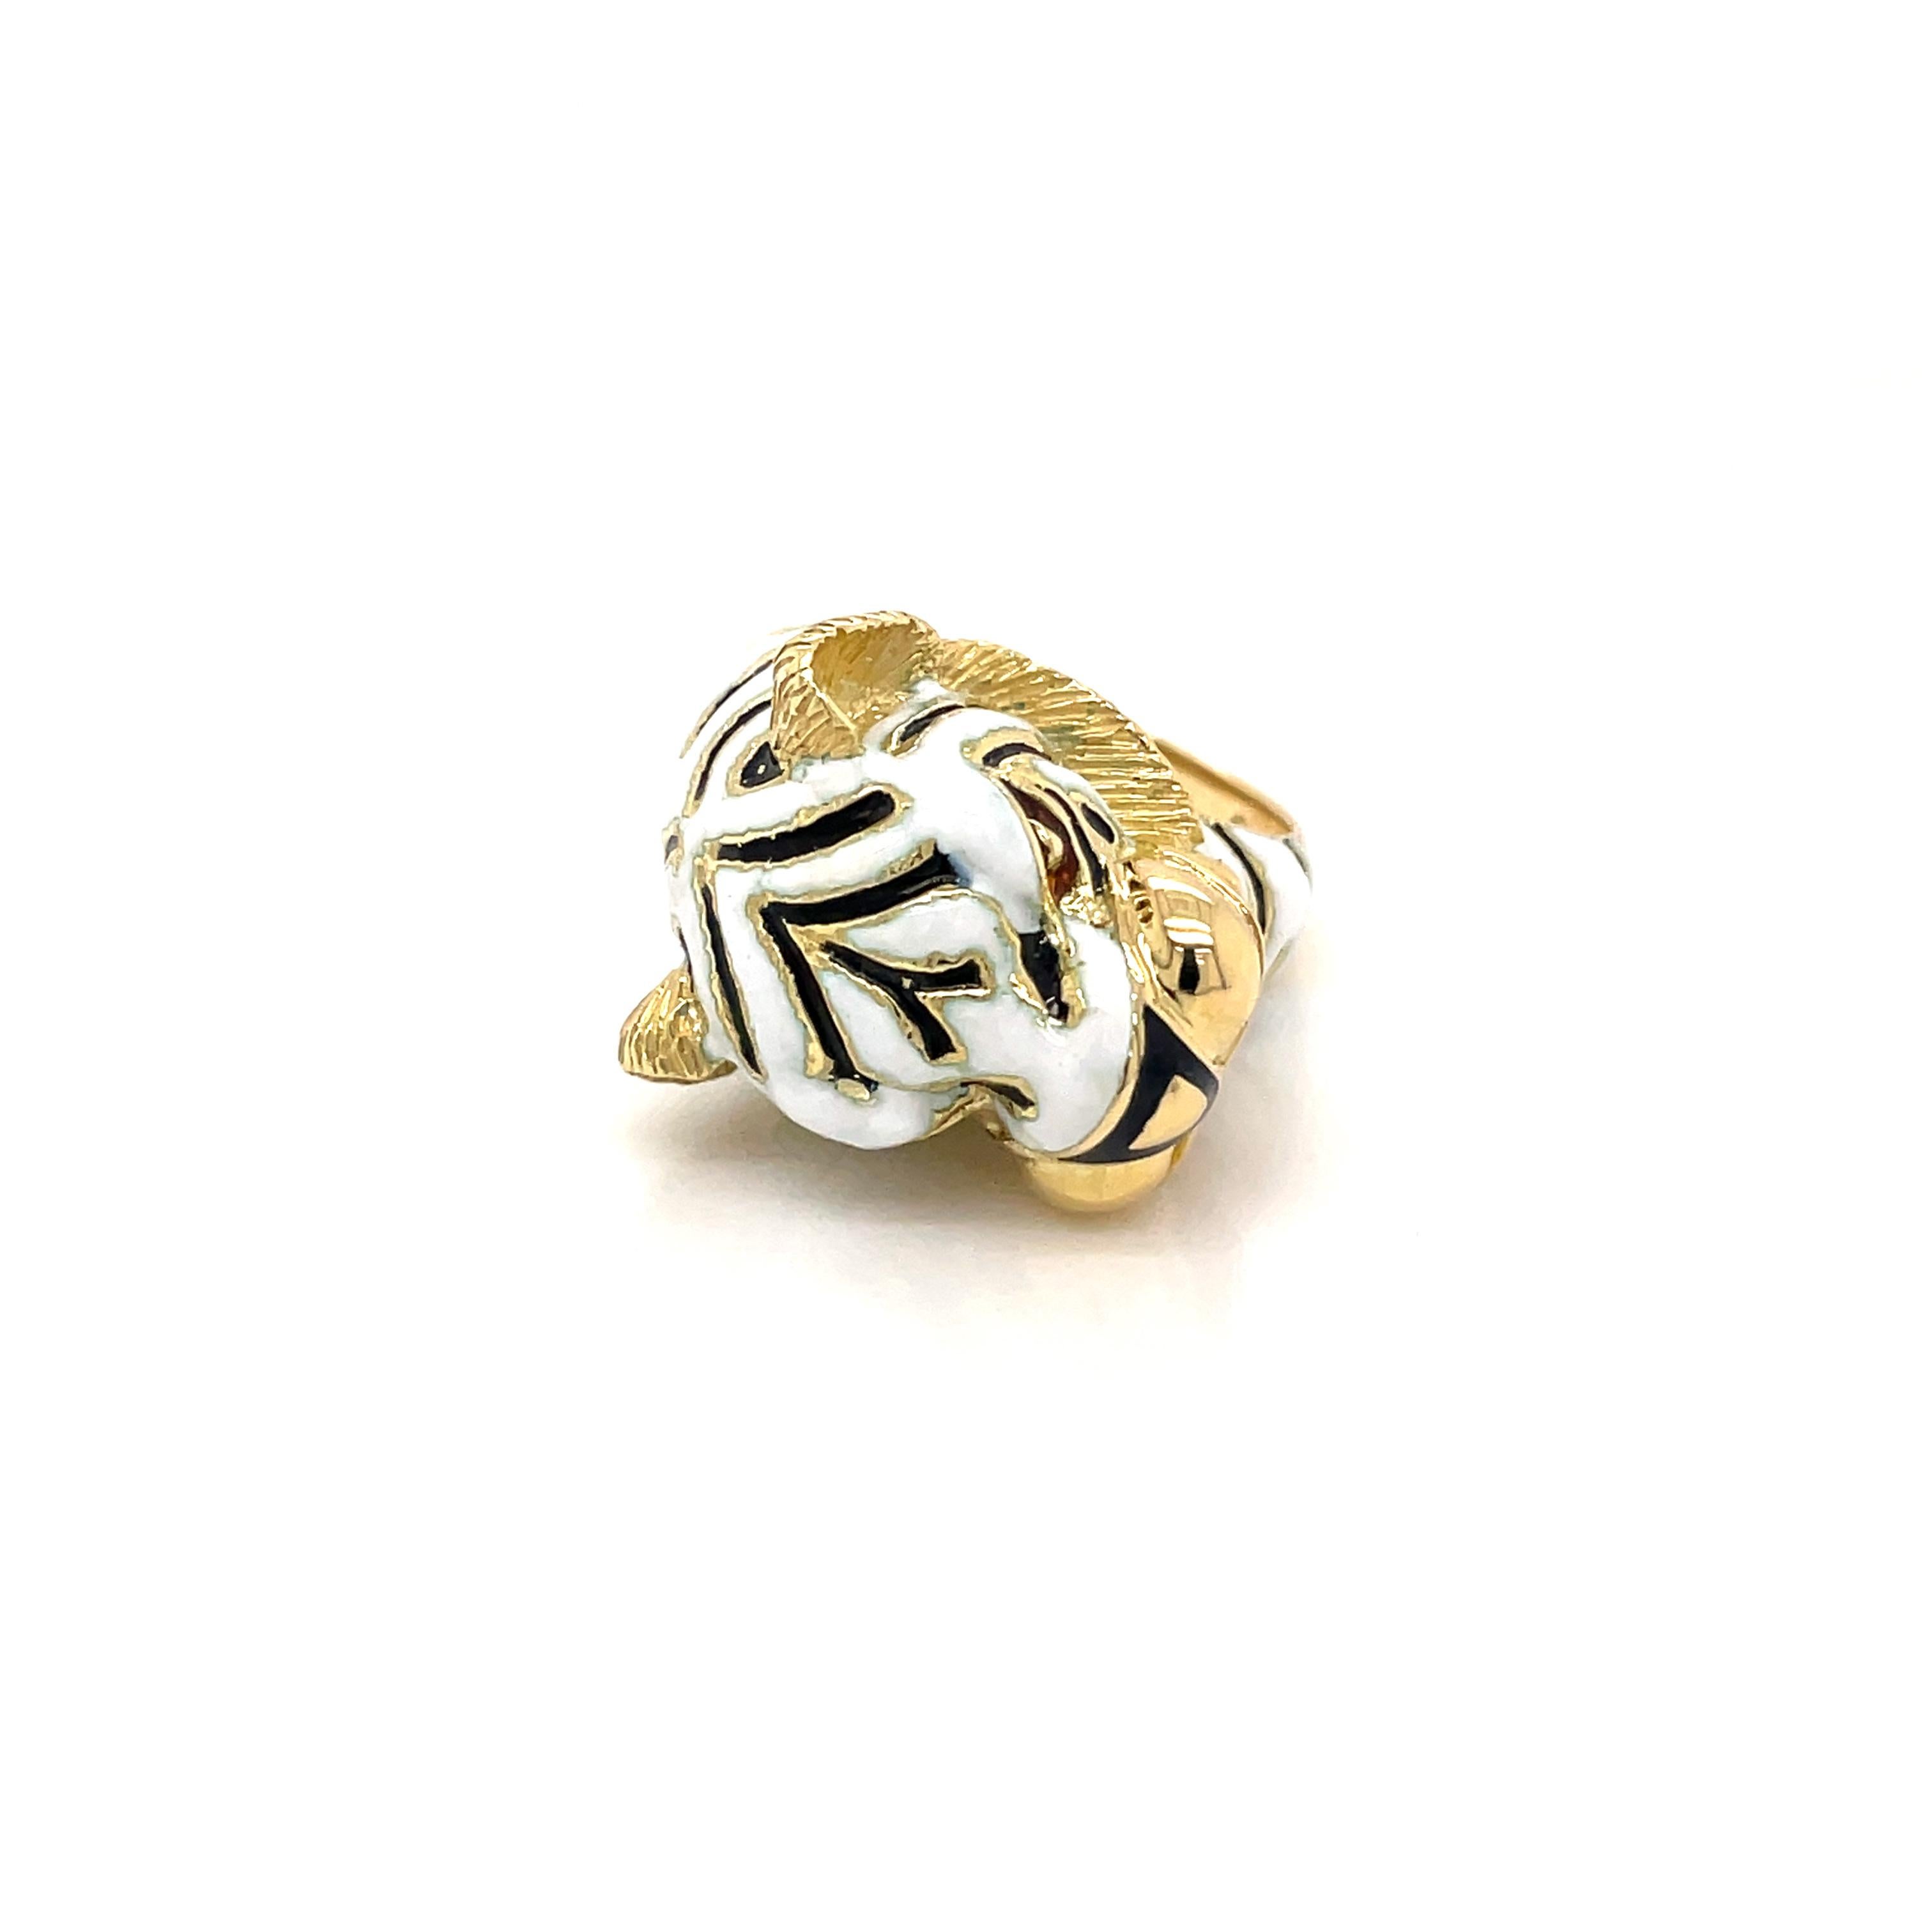 Frascarolo Italy Enamel Gold Tiger Ring 4